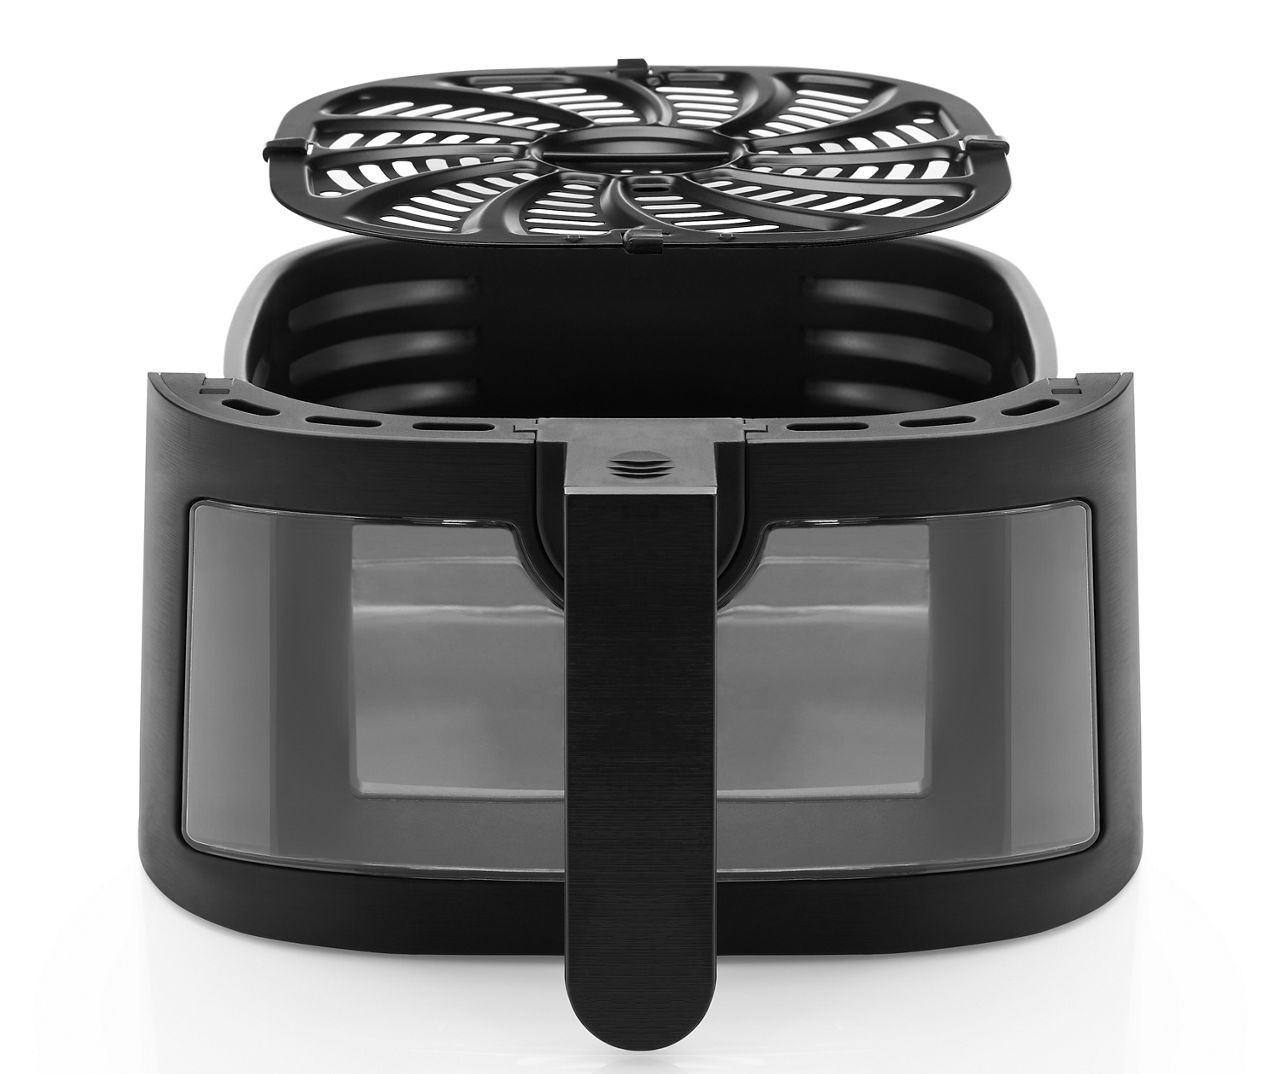 Chefman Turbofry Digital Touch Dual Basket Air Fryer, XL 9 Qt, 1500W, Black  